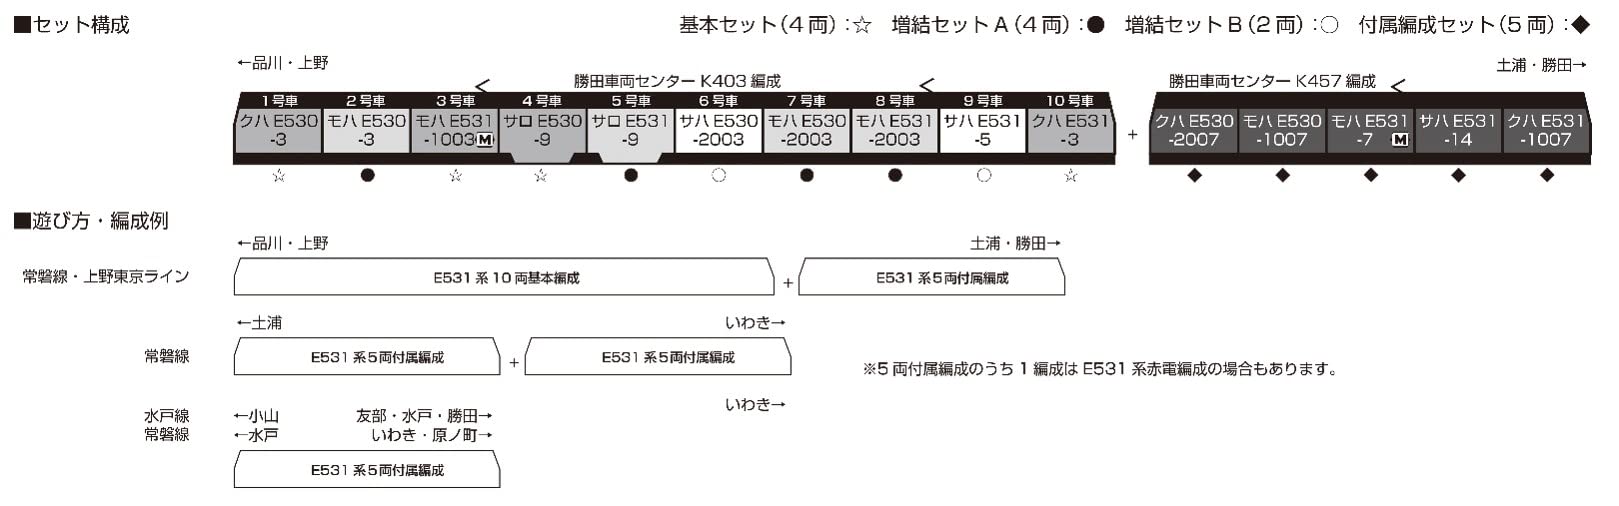 Kato Spur N 4-Wagen-Ergänzungsset A E531 Serie Joban Ueno Tokyo Line Eisenbahn-Modellzug 10-1844